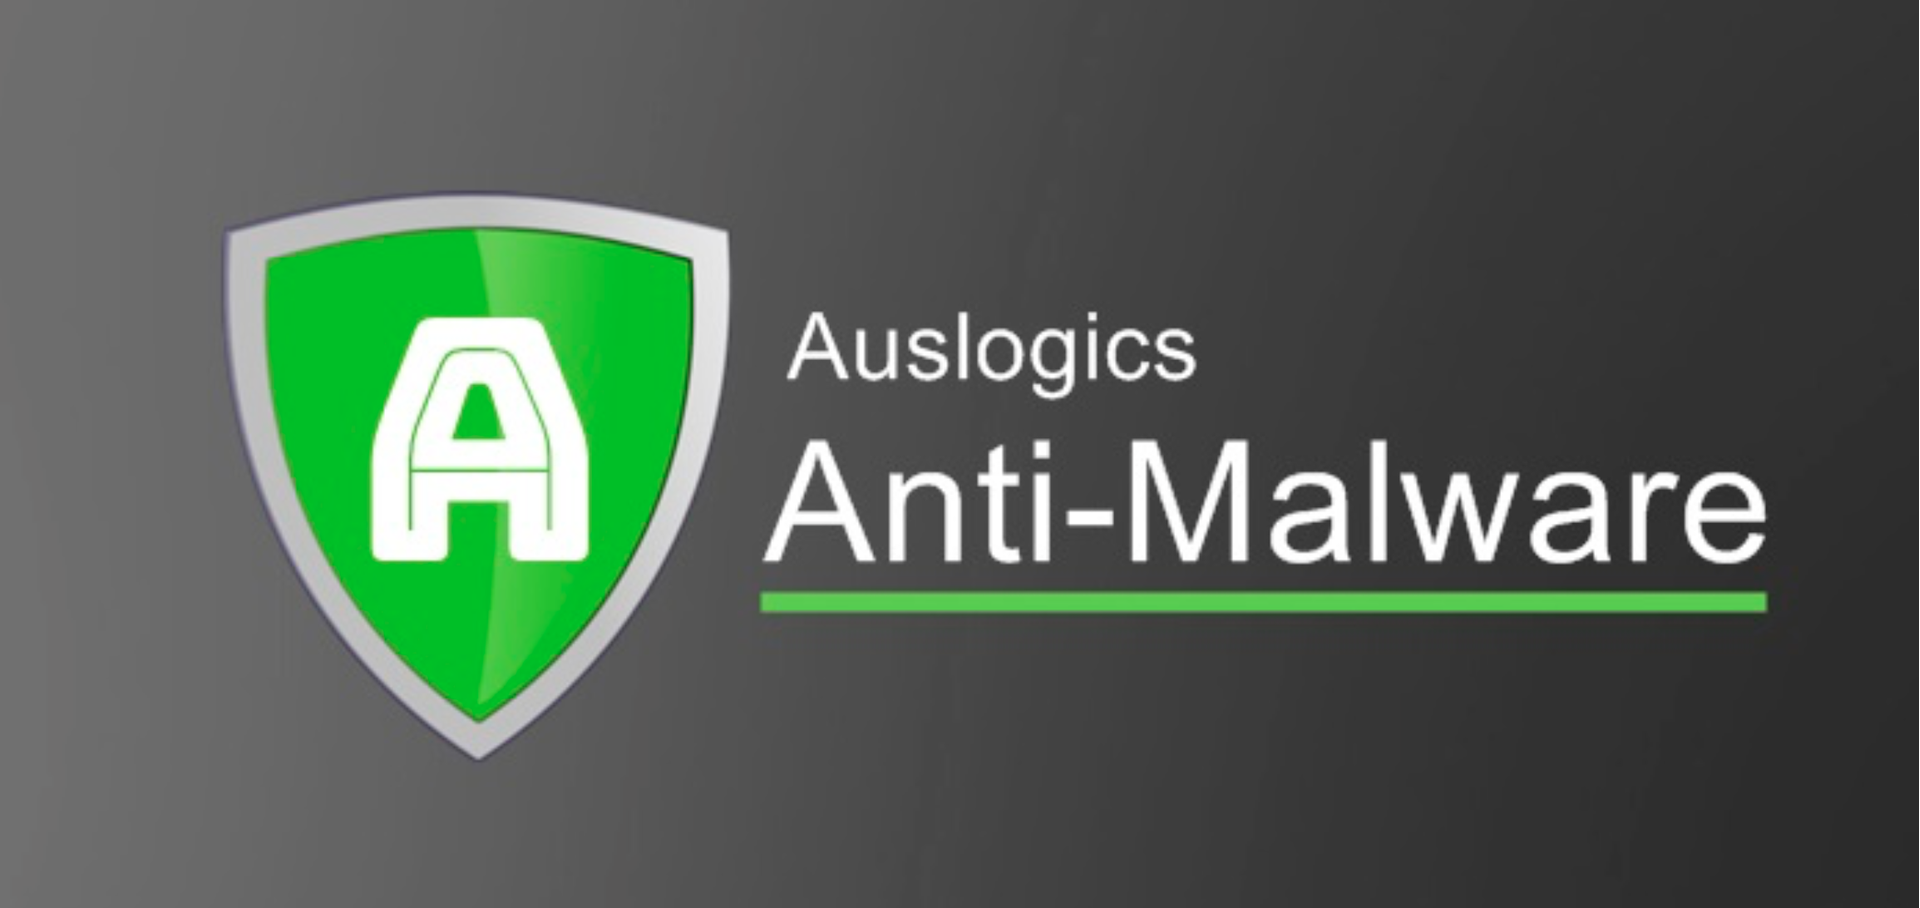 Advantages of Auslogics Anti Malware